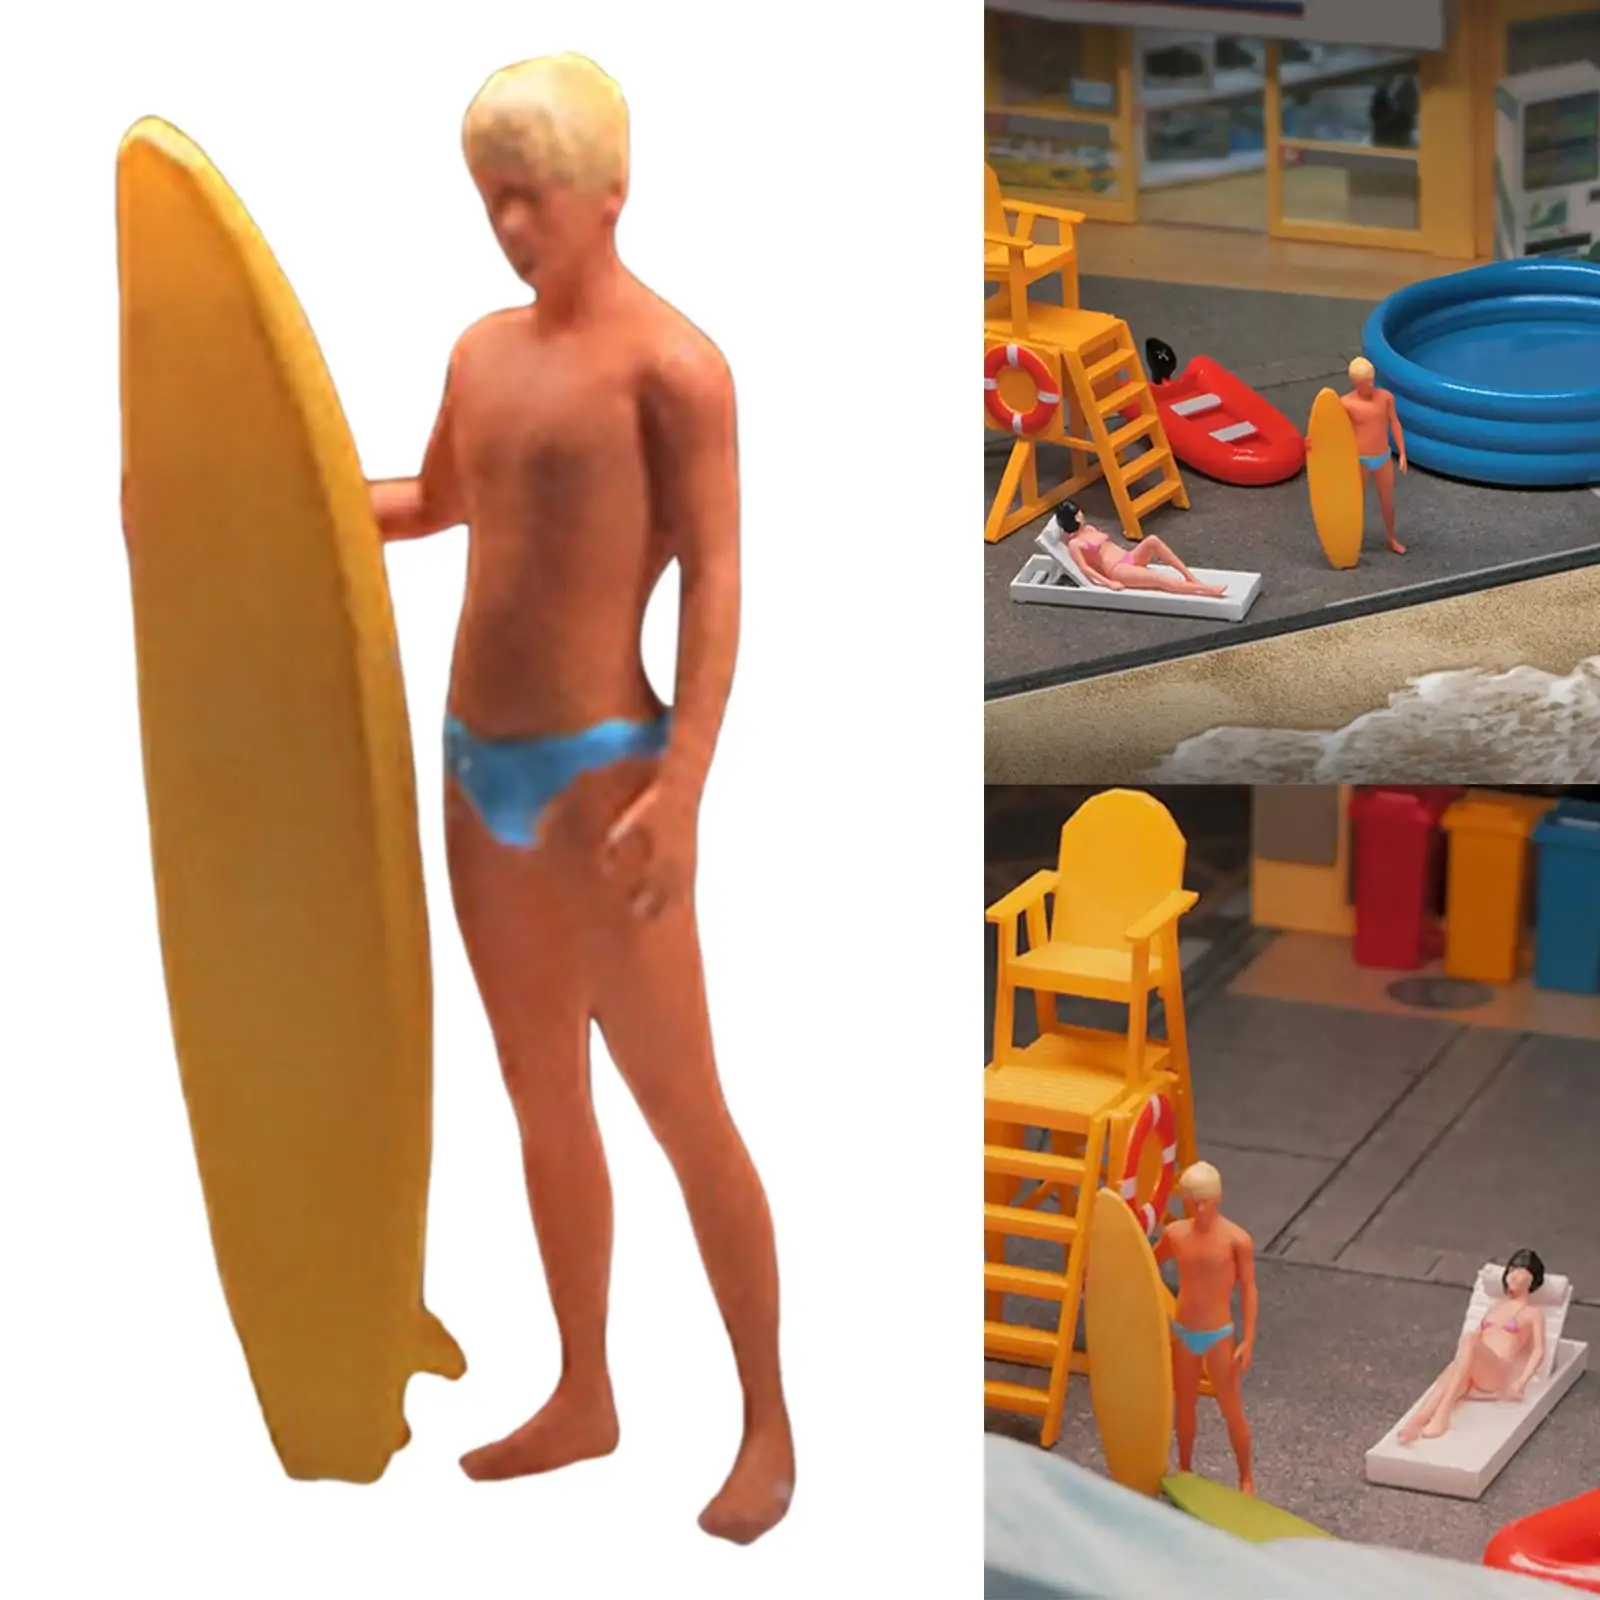 1/64 Scale Beach Model People Figures Realistic Figures for DIY Scene Layout Decor